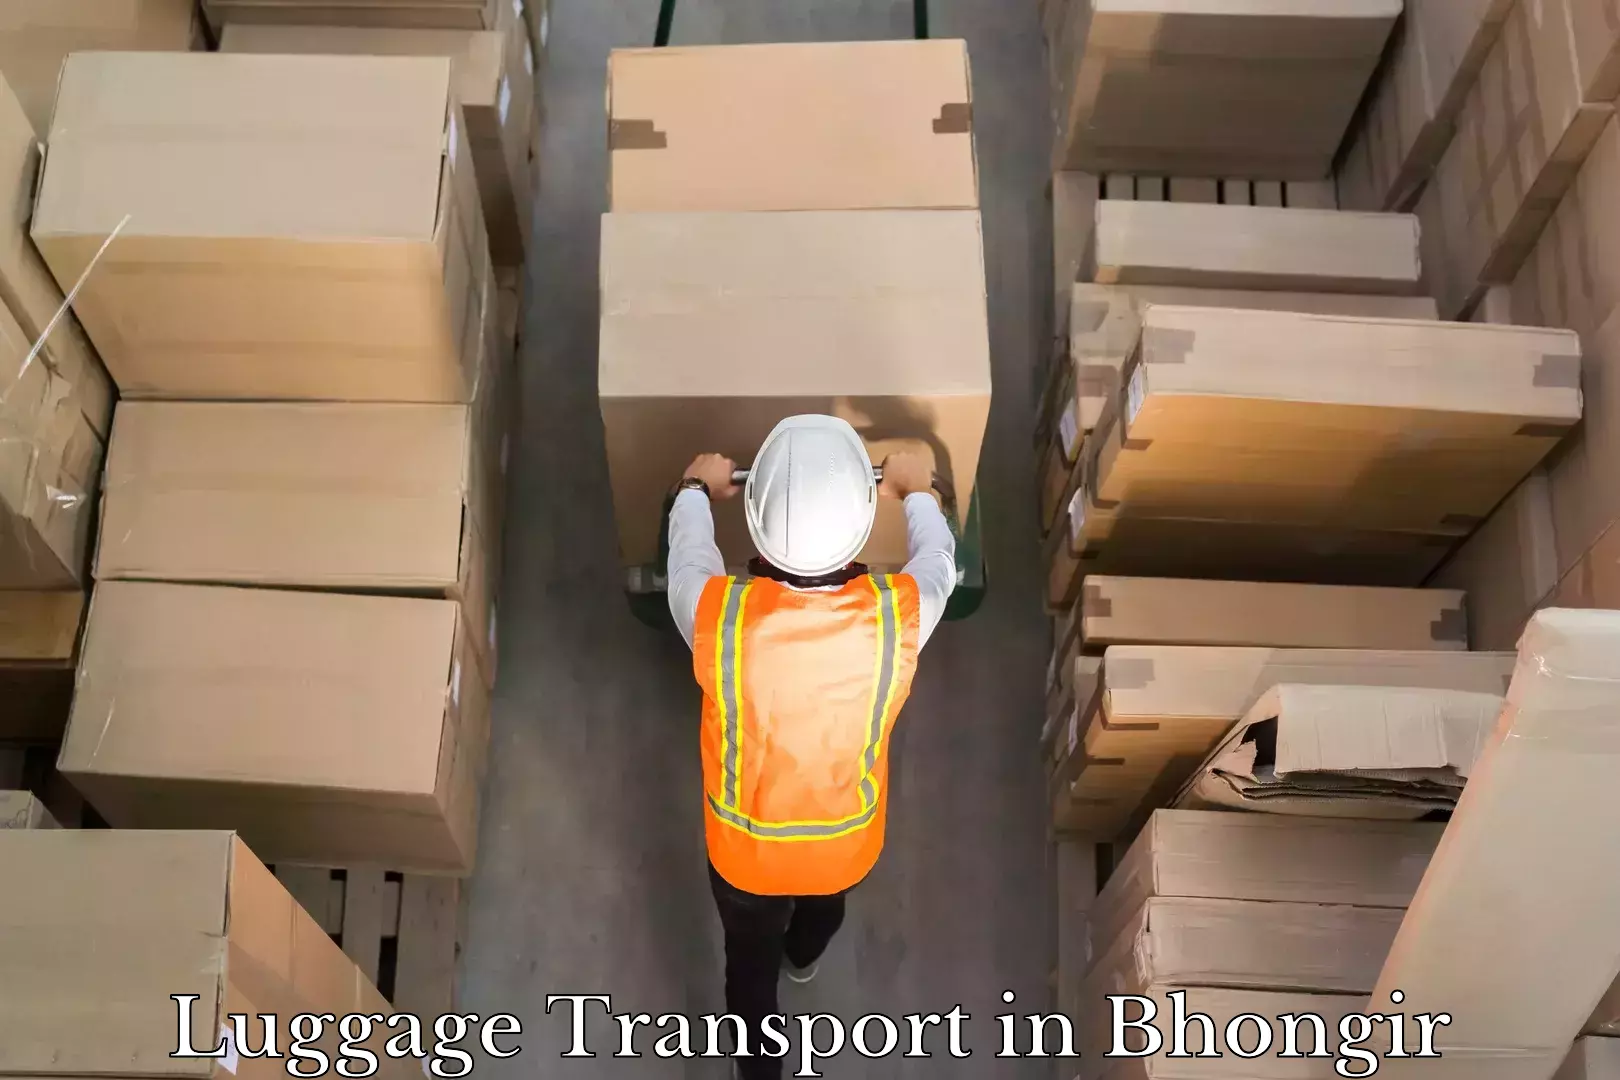 Baggage transport innovation in Bhongir